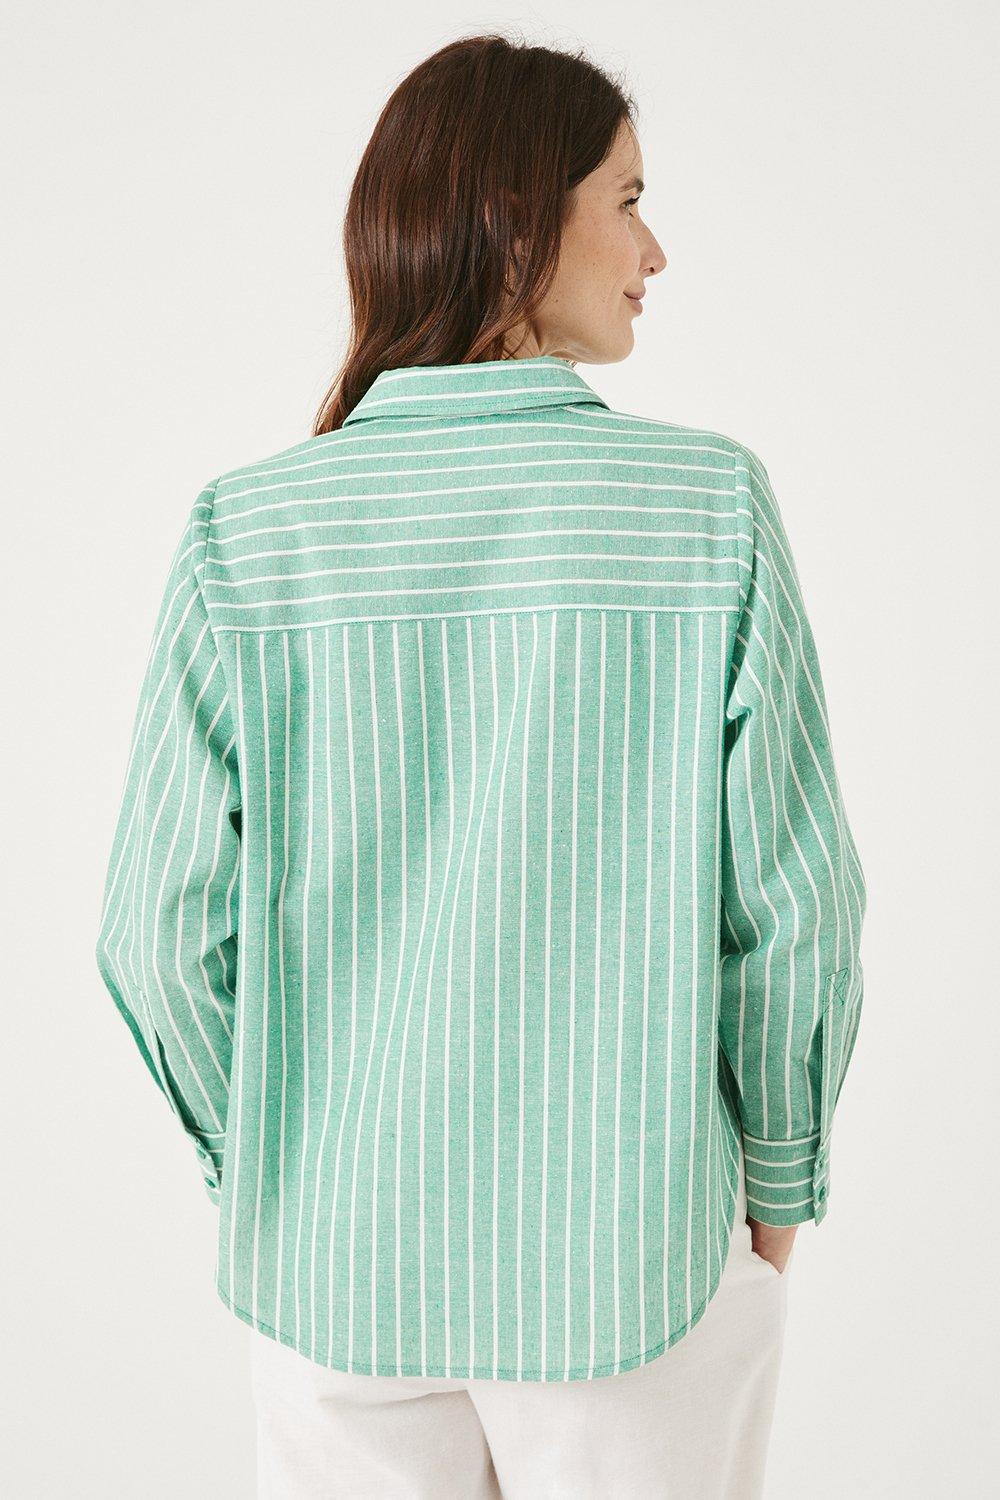 Green and White Striped Shirt | JINJIN - Astro XL